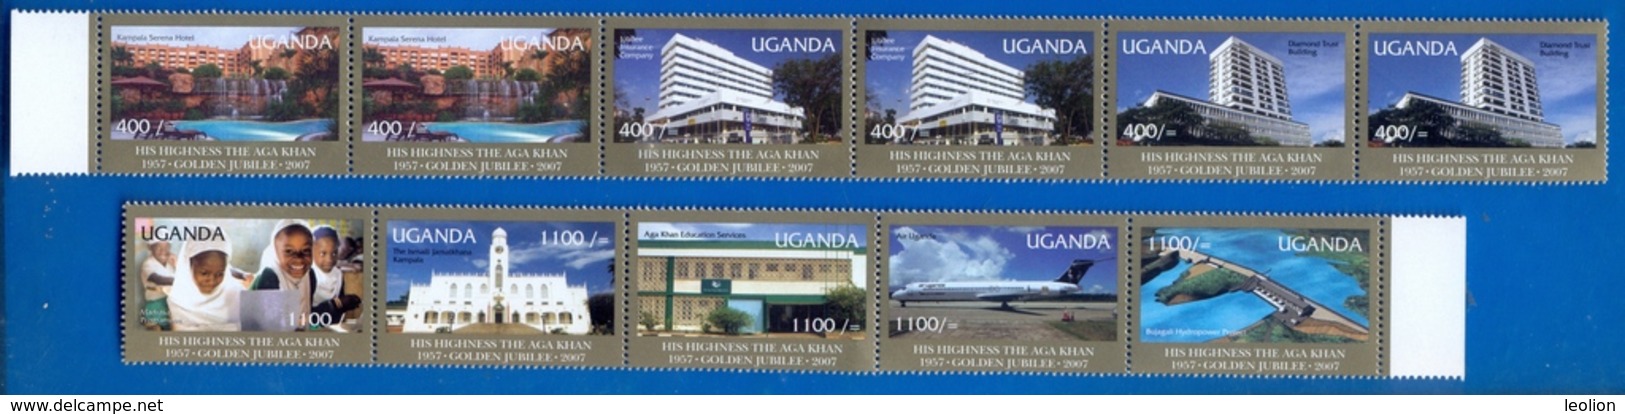 UGANDA Stamps Aga Khan 50th Anniversary Coronation 2008 Se-tenant MNH OUGANDA - Uganda (1962-...)